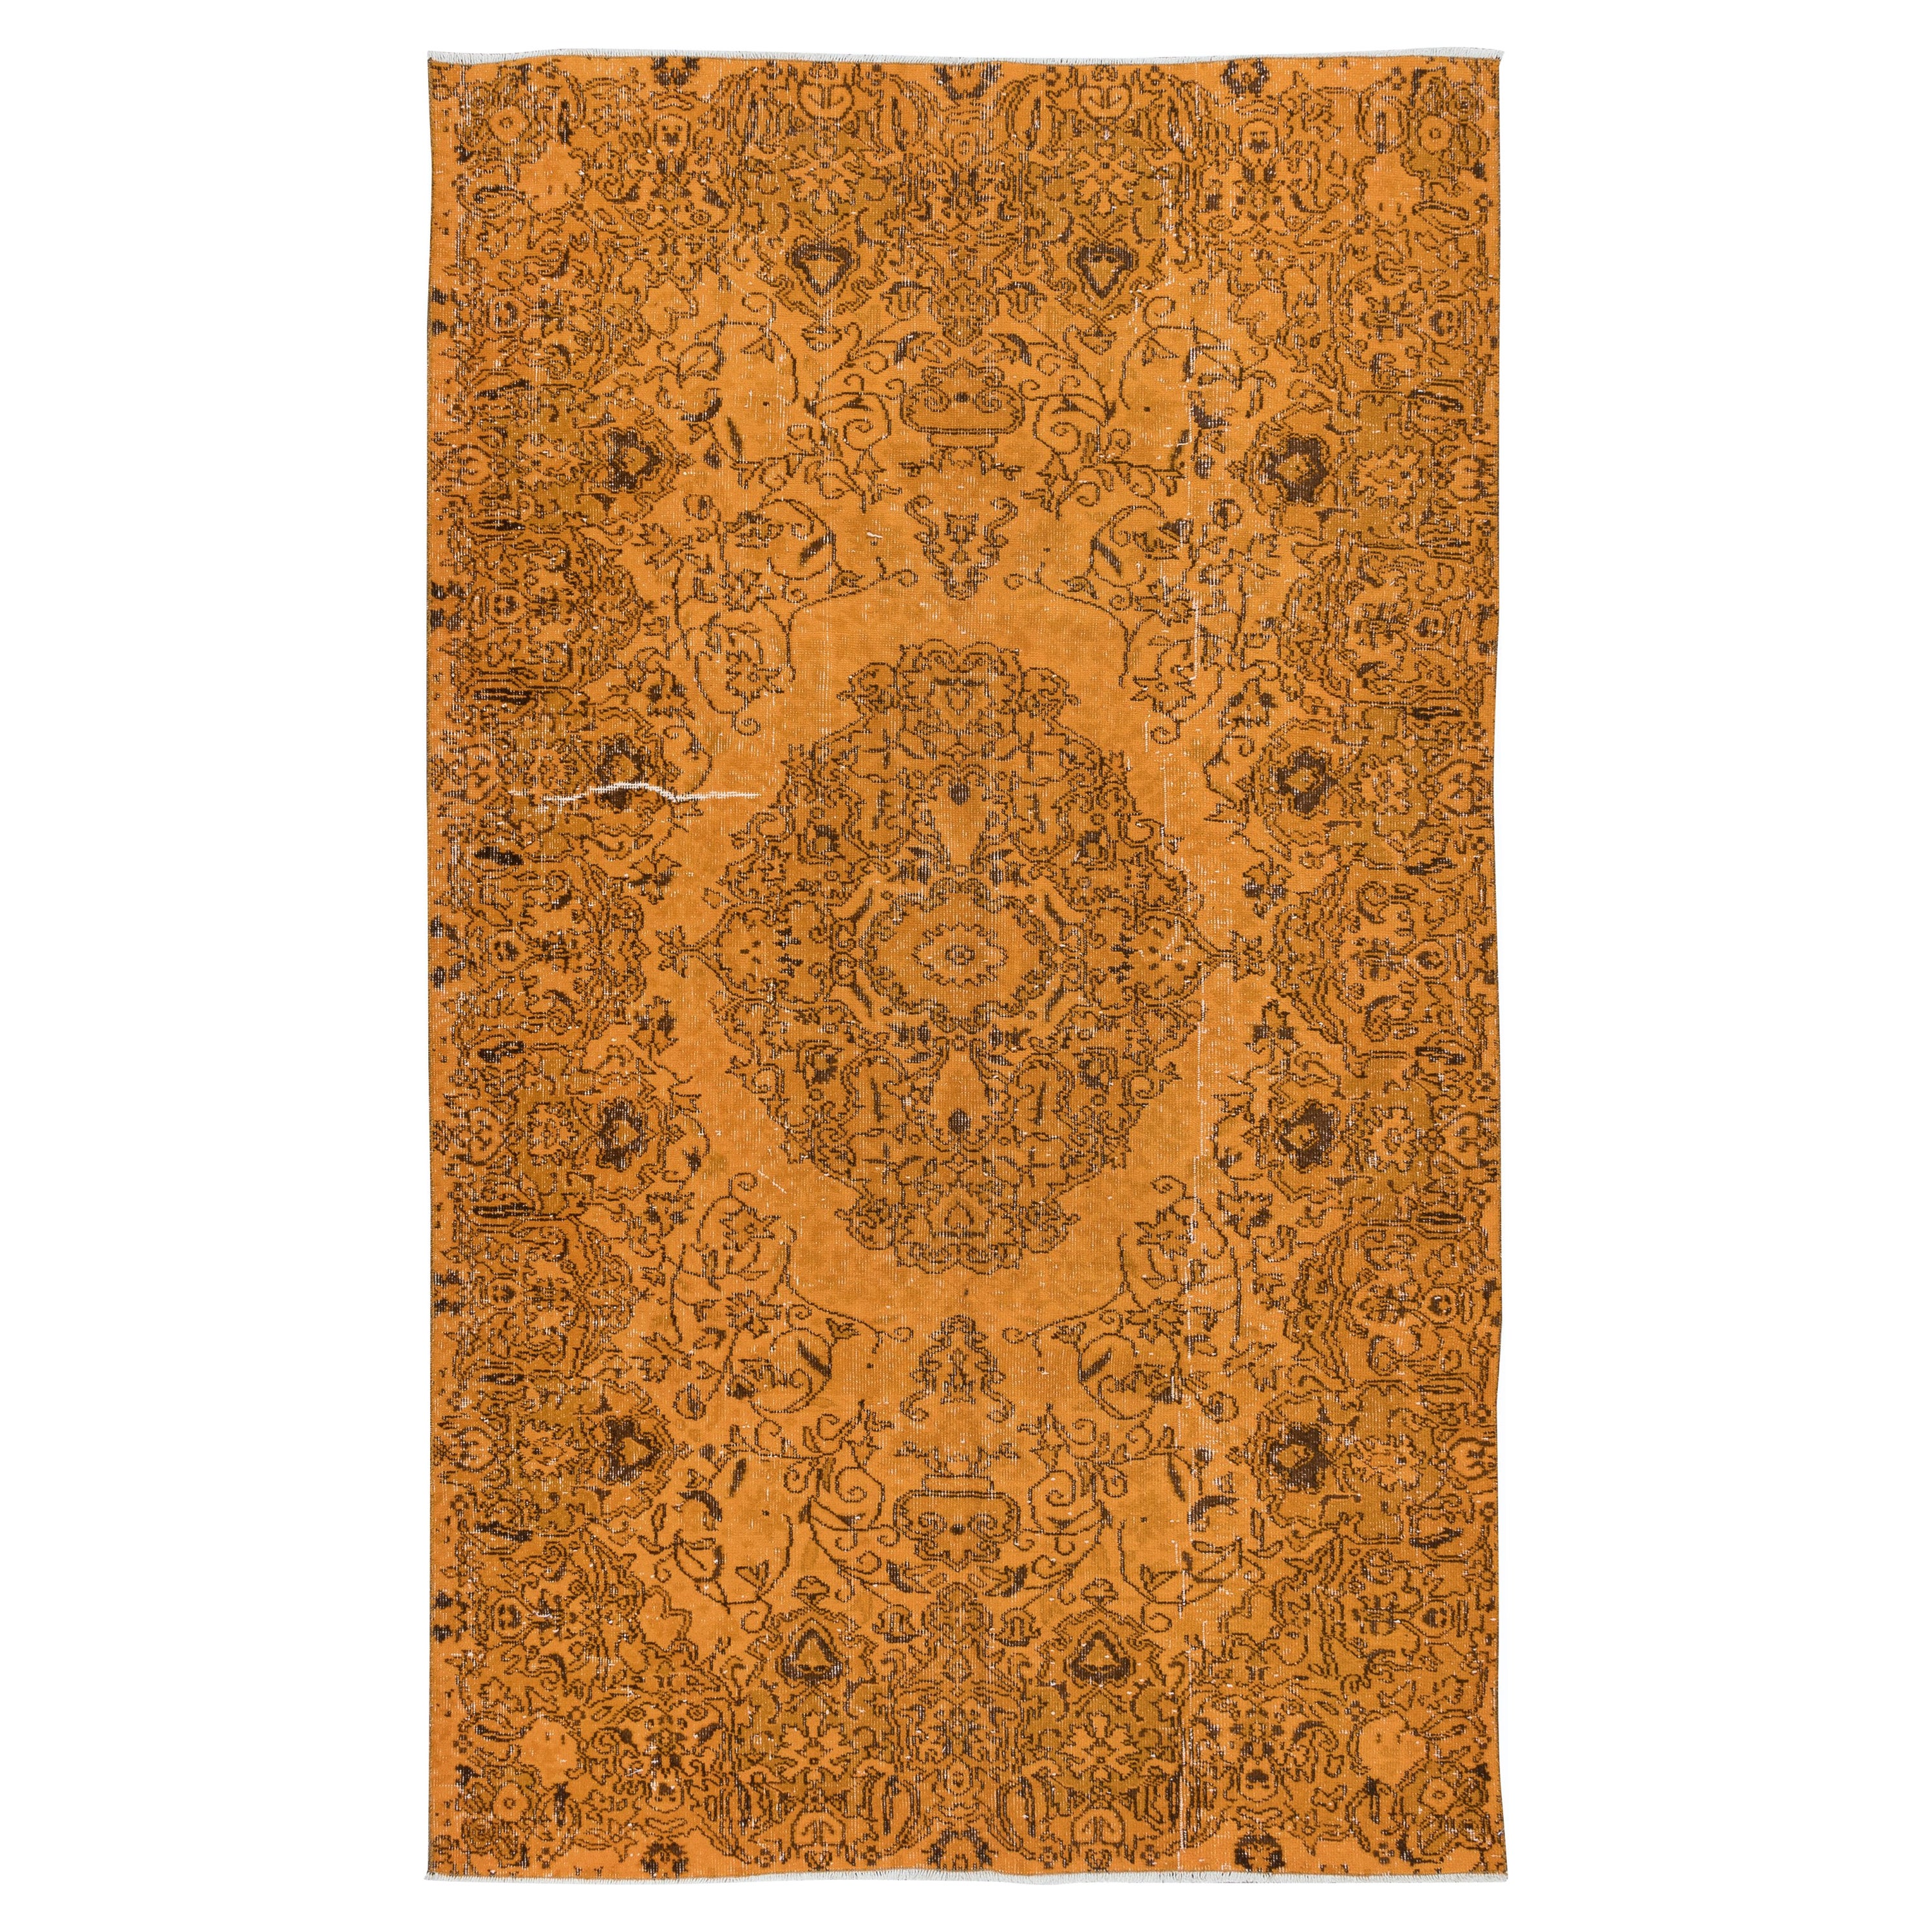 5.2x8.4 Ft Handmade Orange Area Rug from Turkey, Modern Medallion Design Carpet